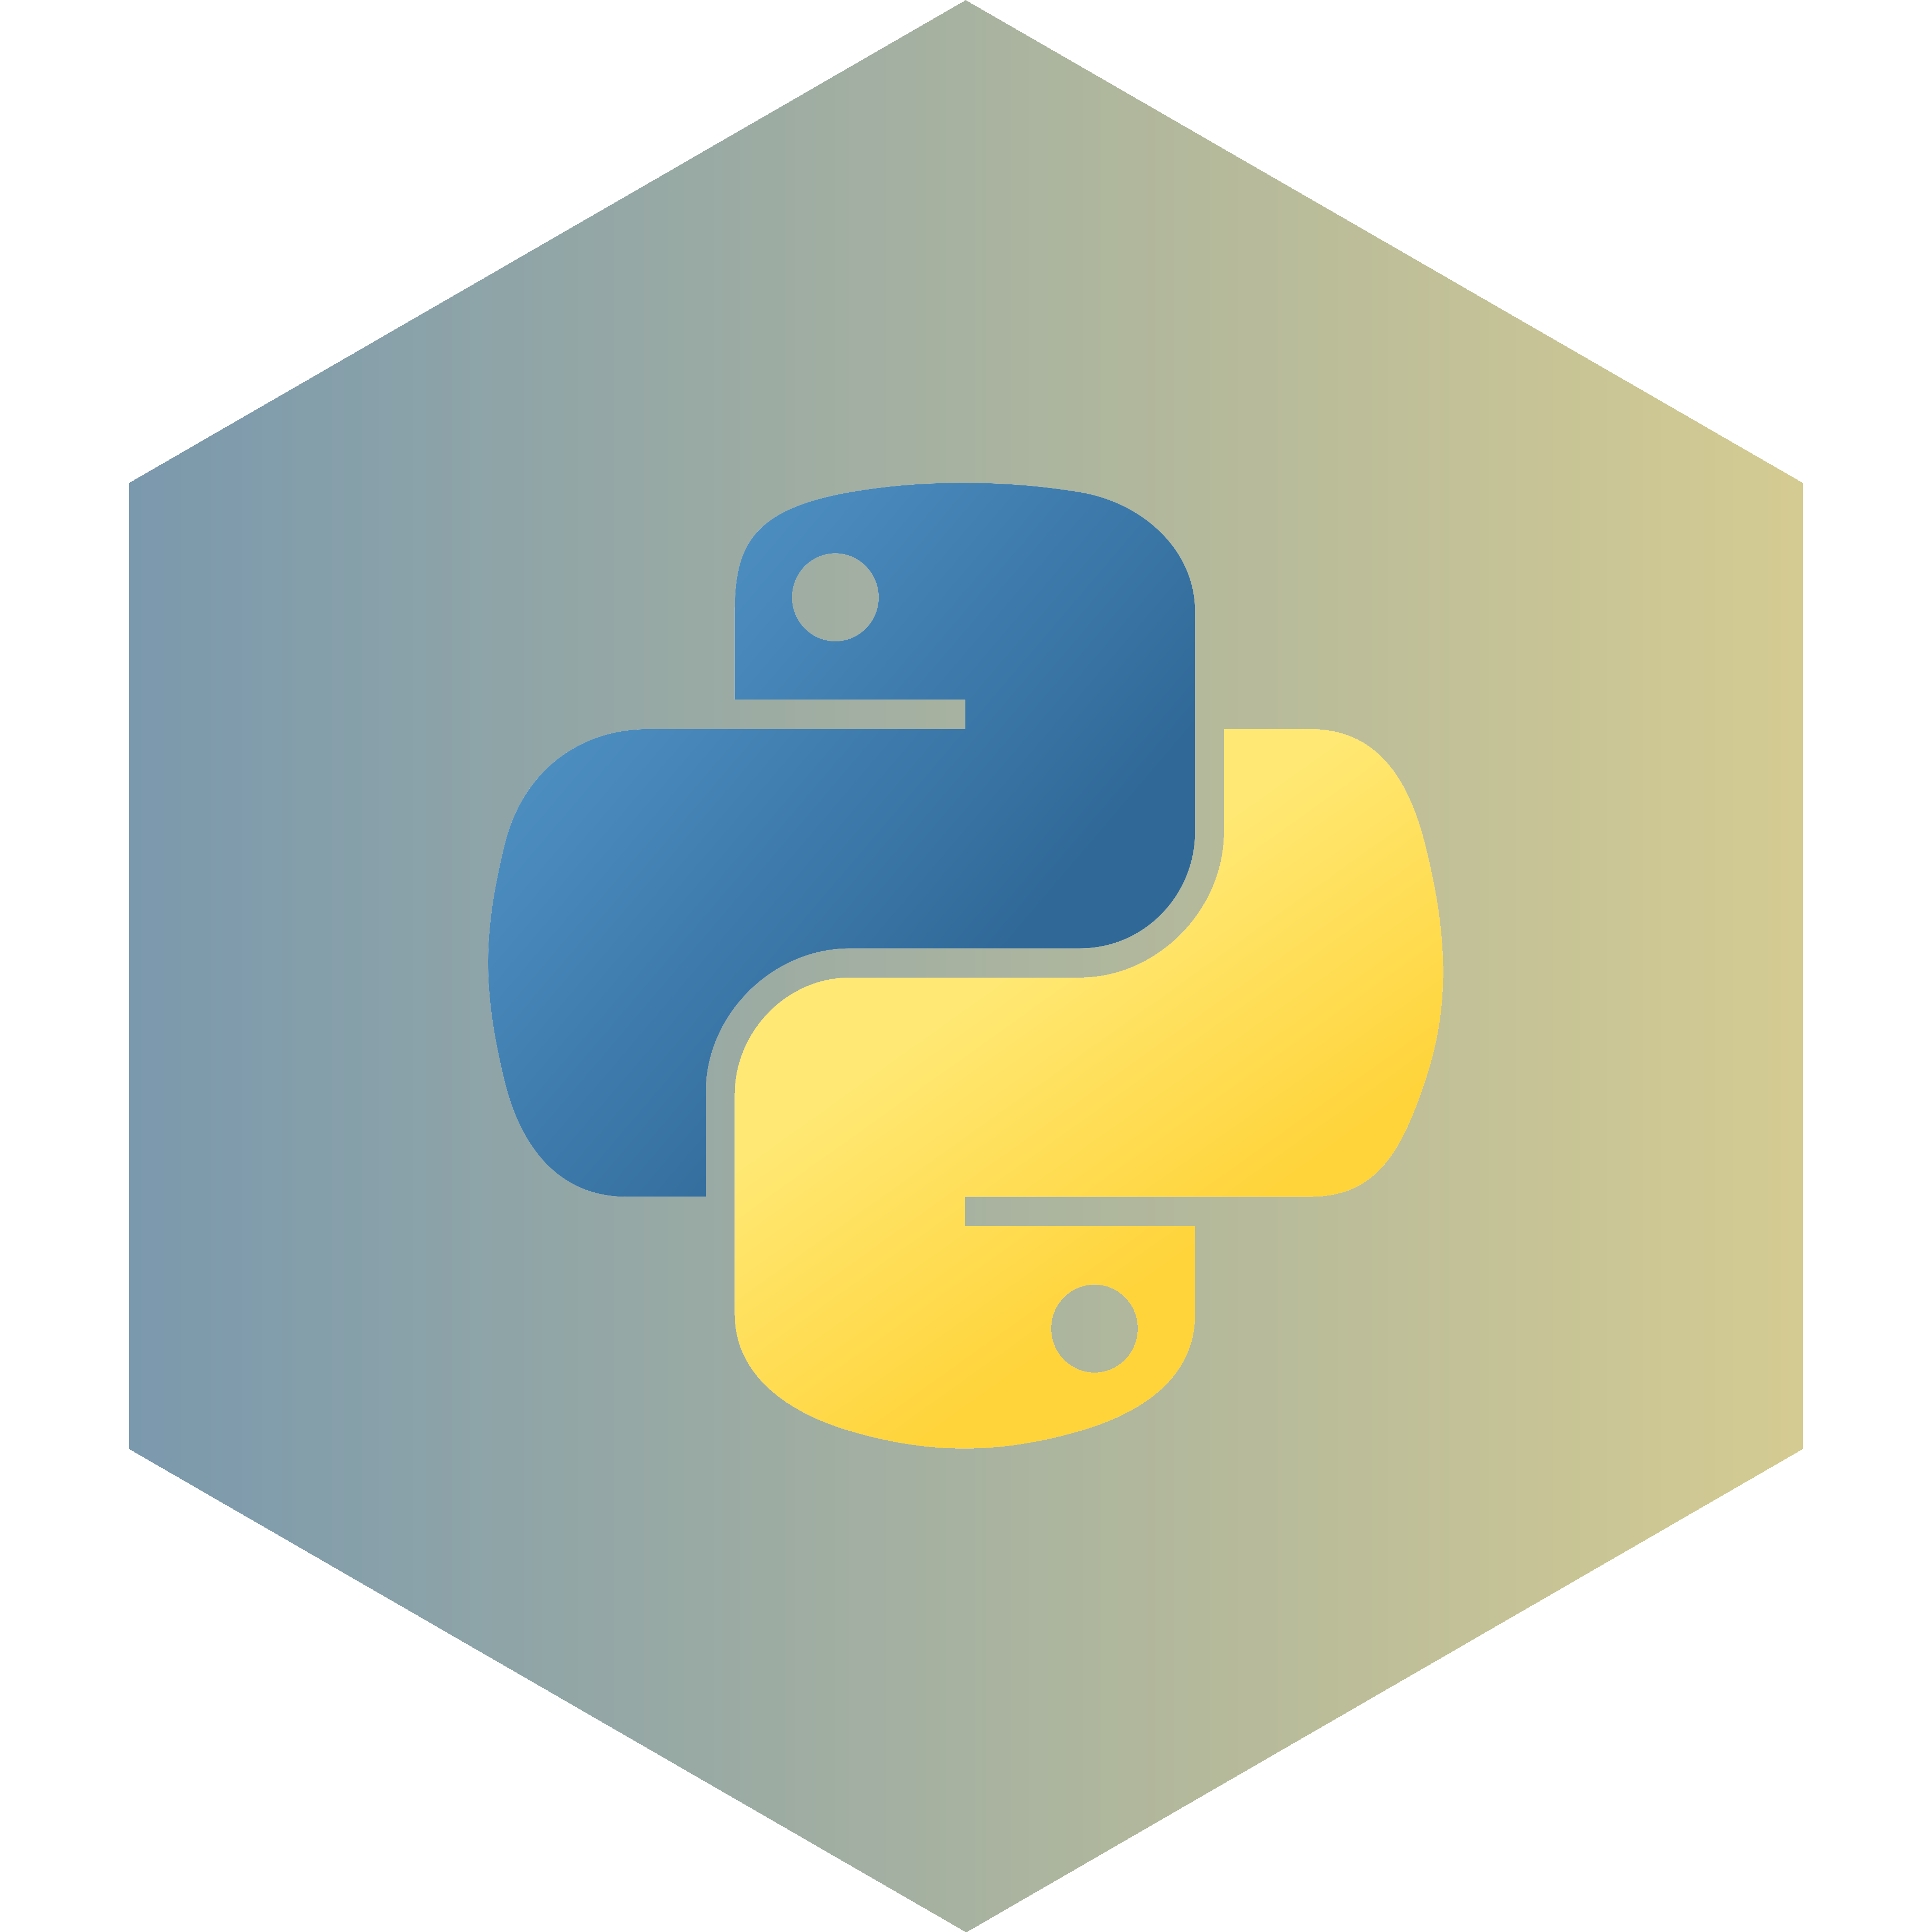 technical skills - python - programming language